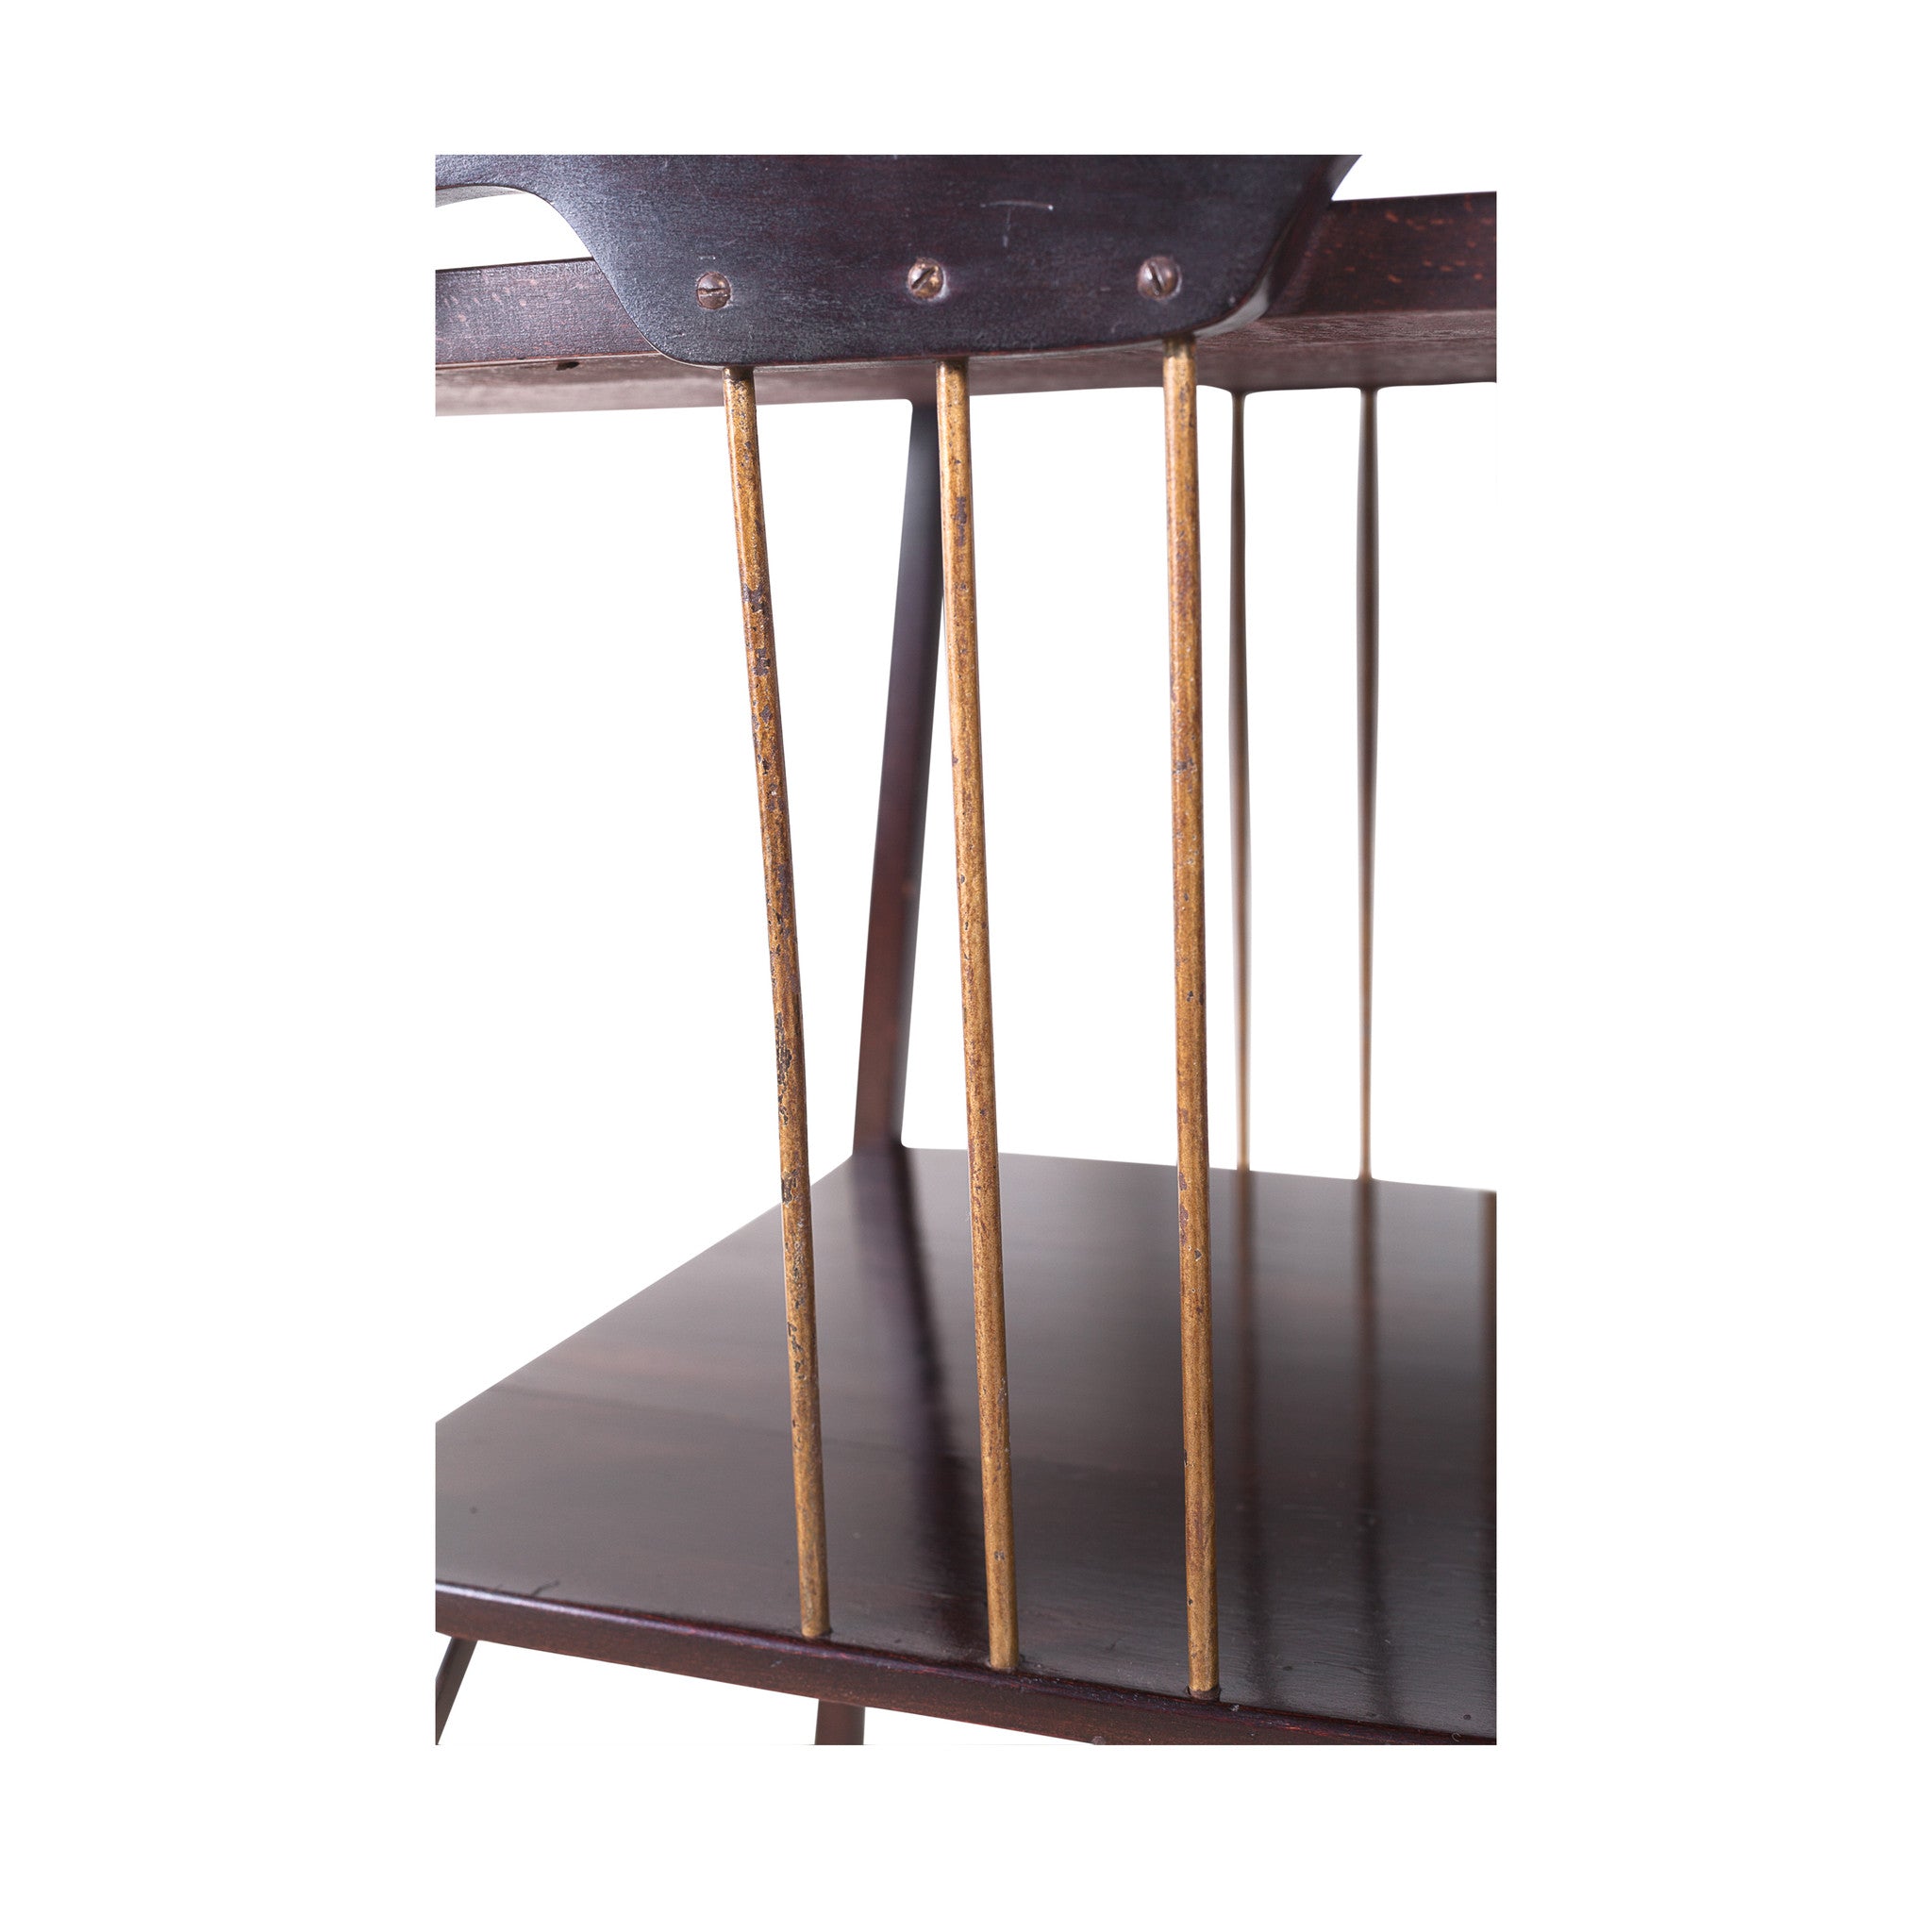 Two Shelves Side Table n.32, Thonet, Austria 1900 - ONEROOM